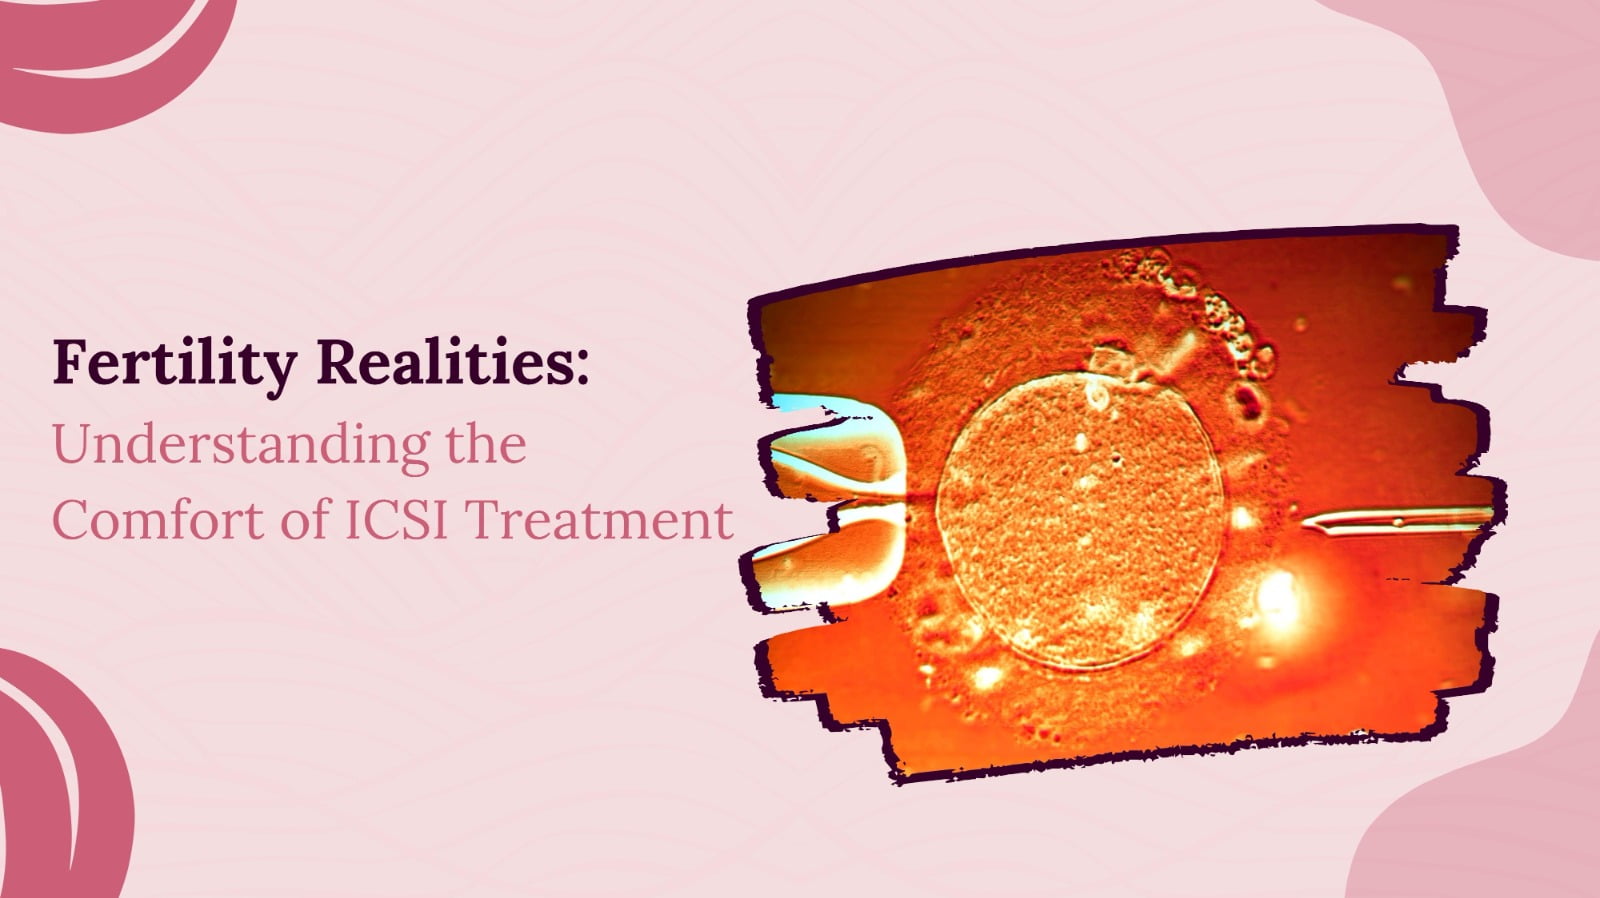 Fertility Realities: Understanding the Comfort of ICSI Treatment